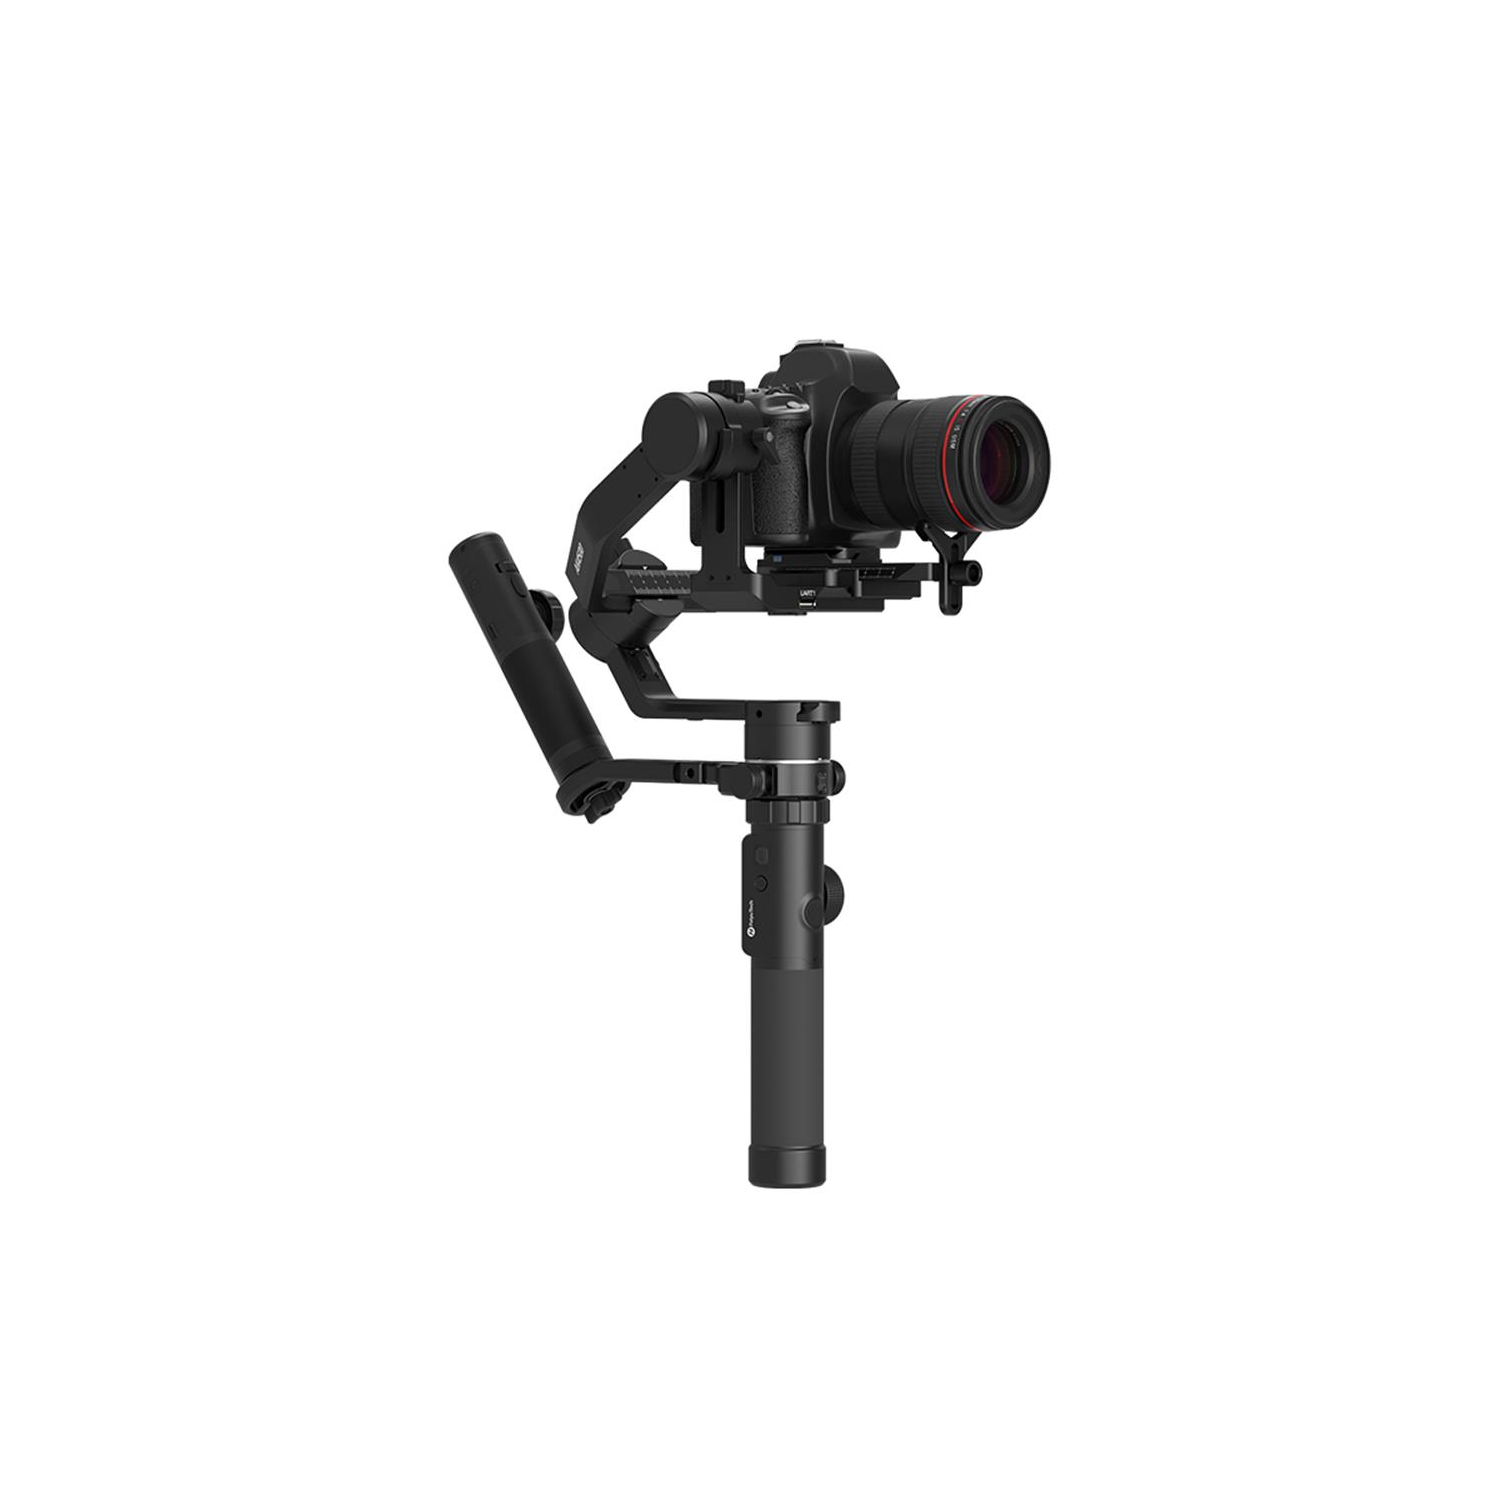 Feiyu Tech AK4500E 3-Axis Gimbal Stabilizer Payload 4.6 KG for Mirrorless & DSLR Camera